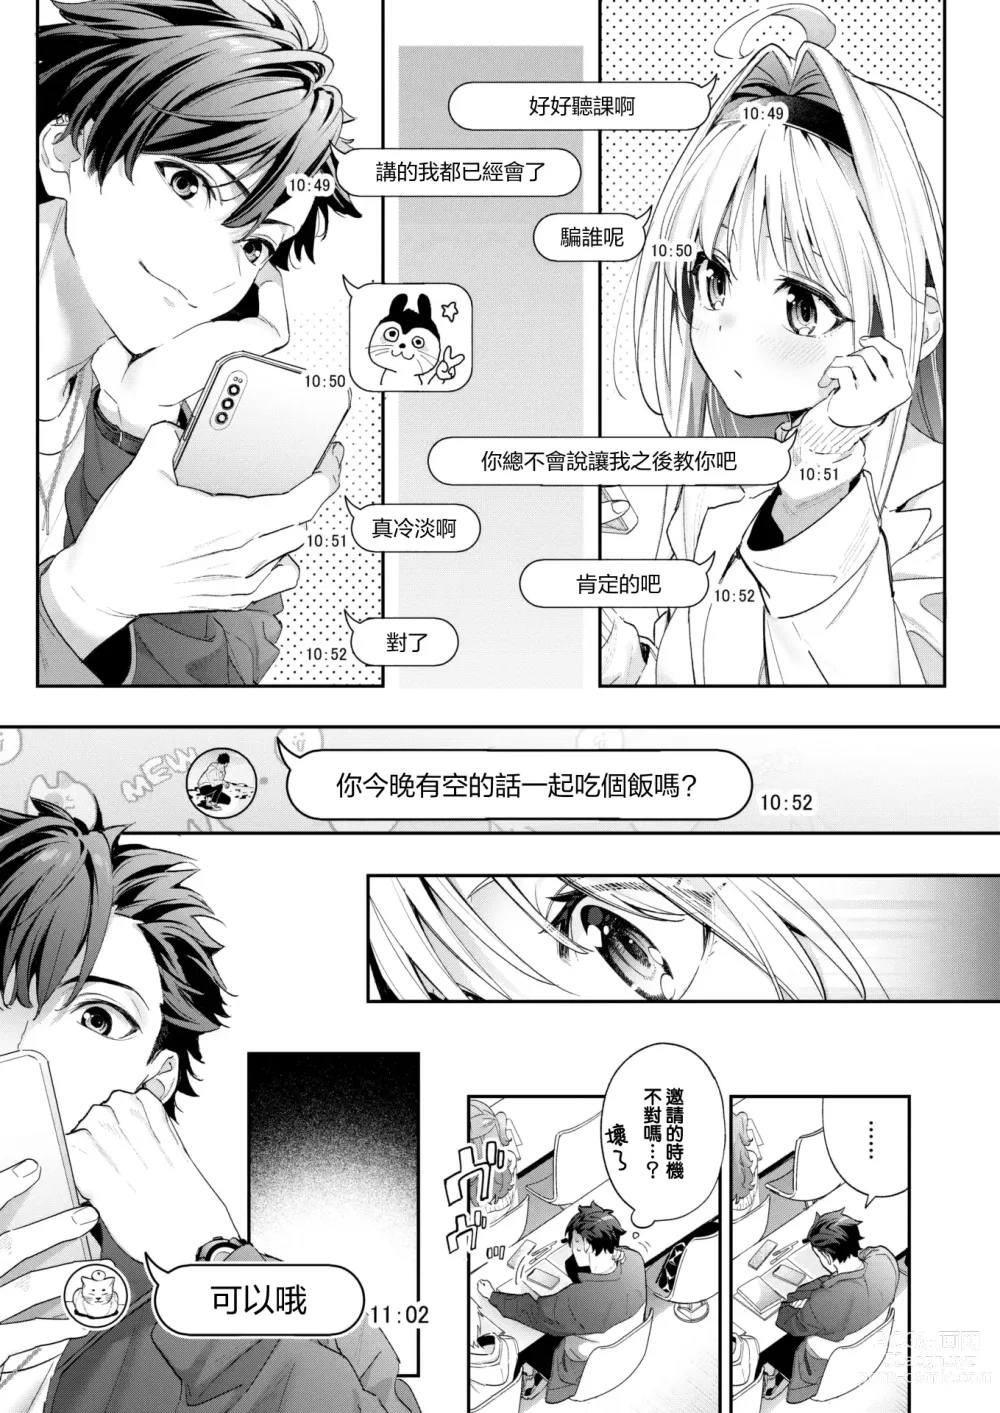 Page 6 of manga melting snow